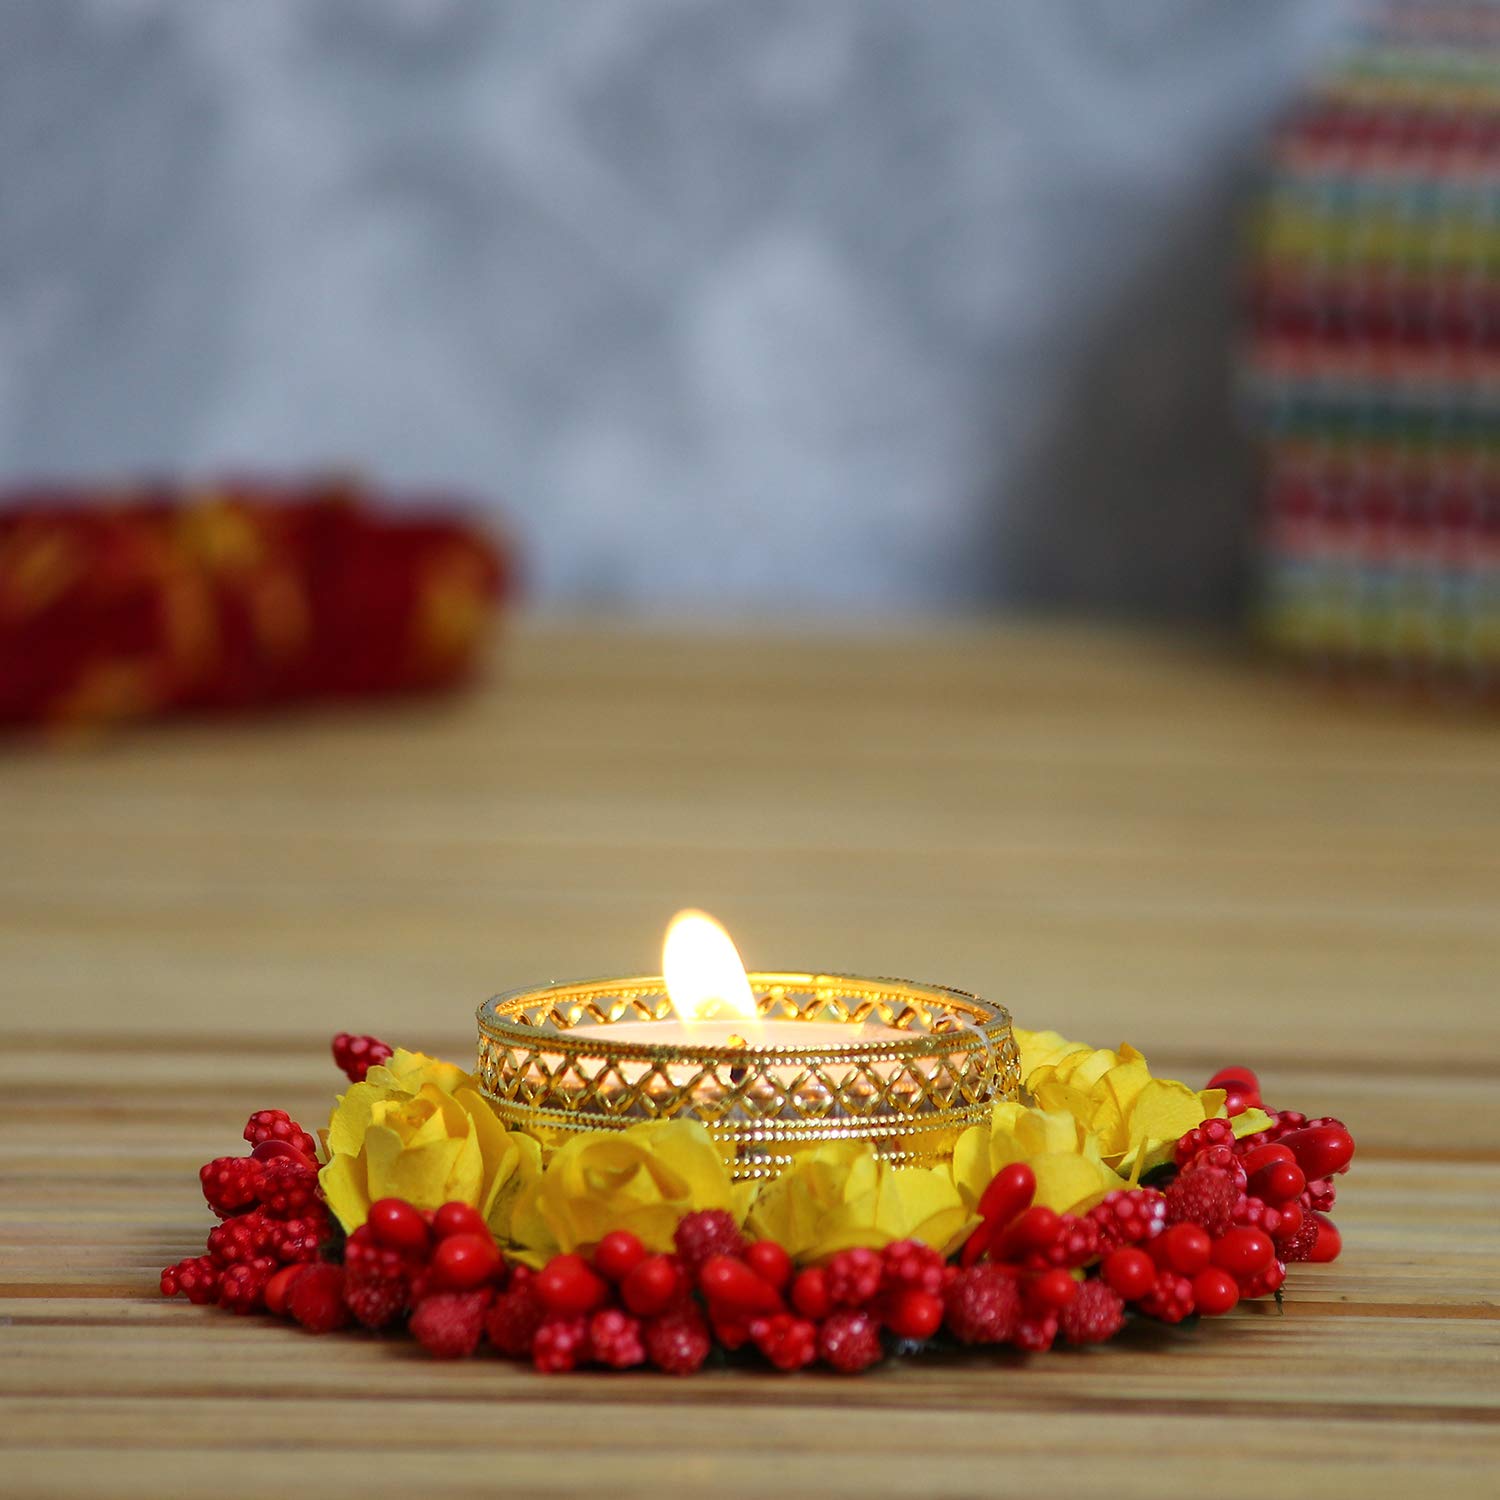 15 Diwali Light Decoration Home Ideas For The Festive Season | LBB